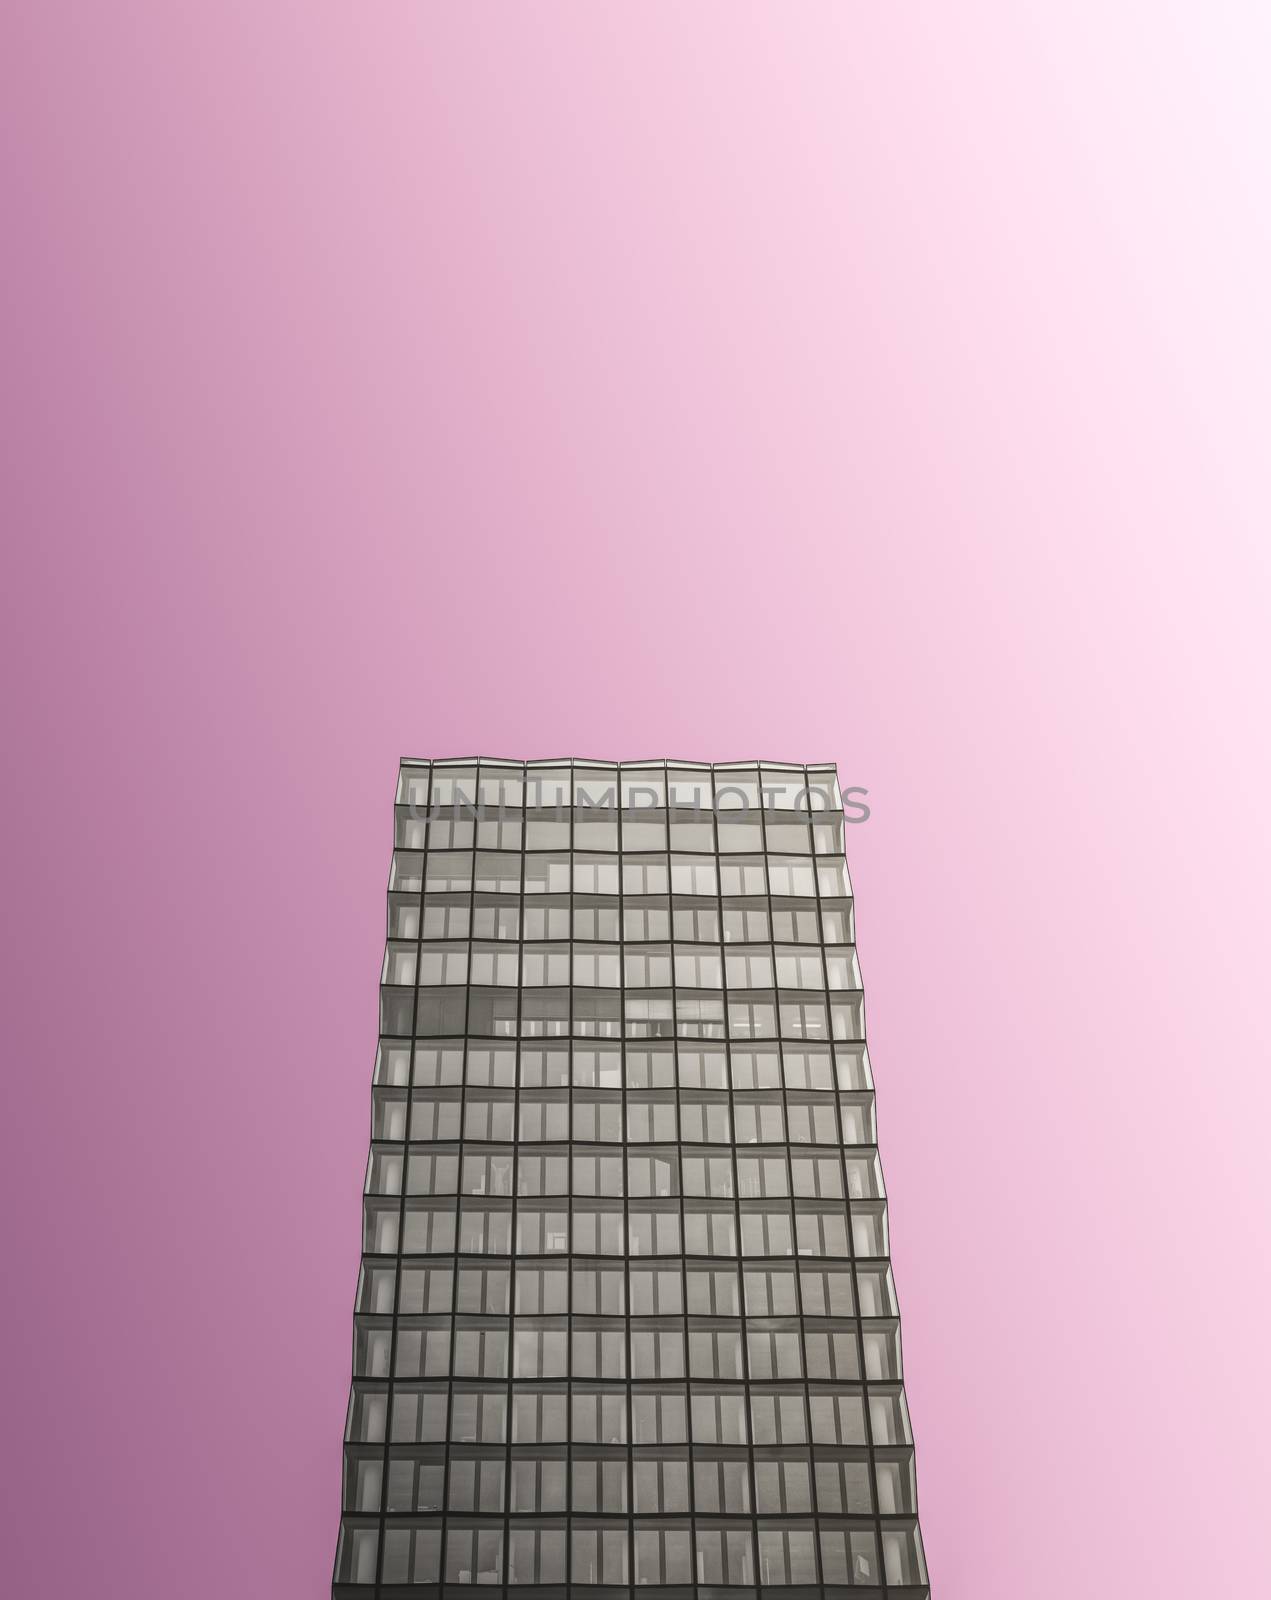 Monochrome Glass Skyscraper On Pink by mrdoomits